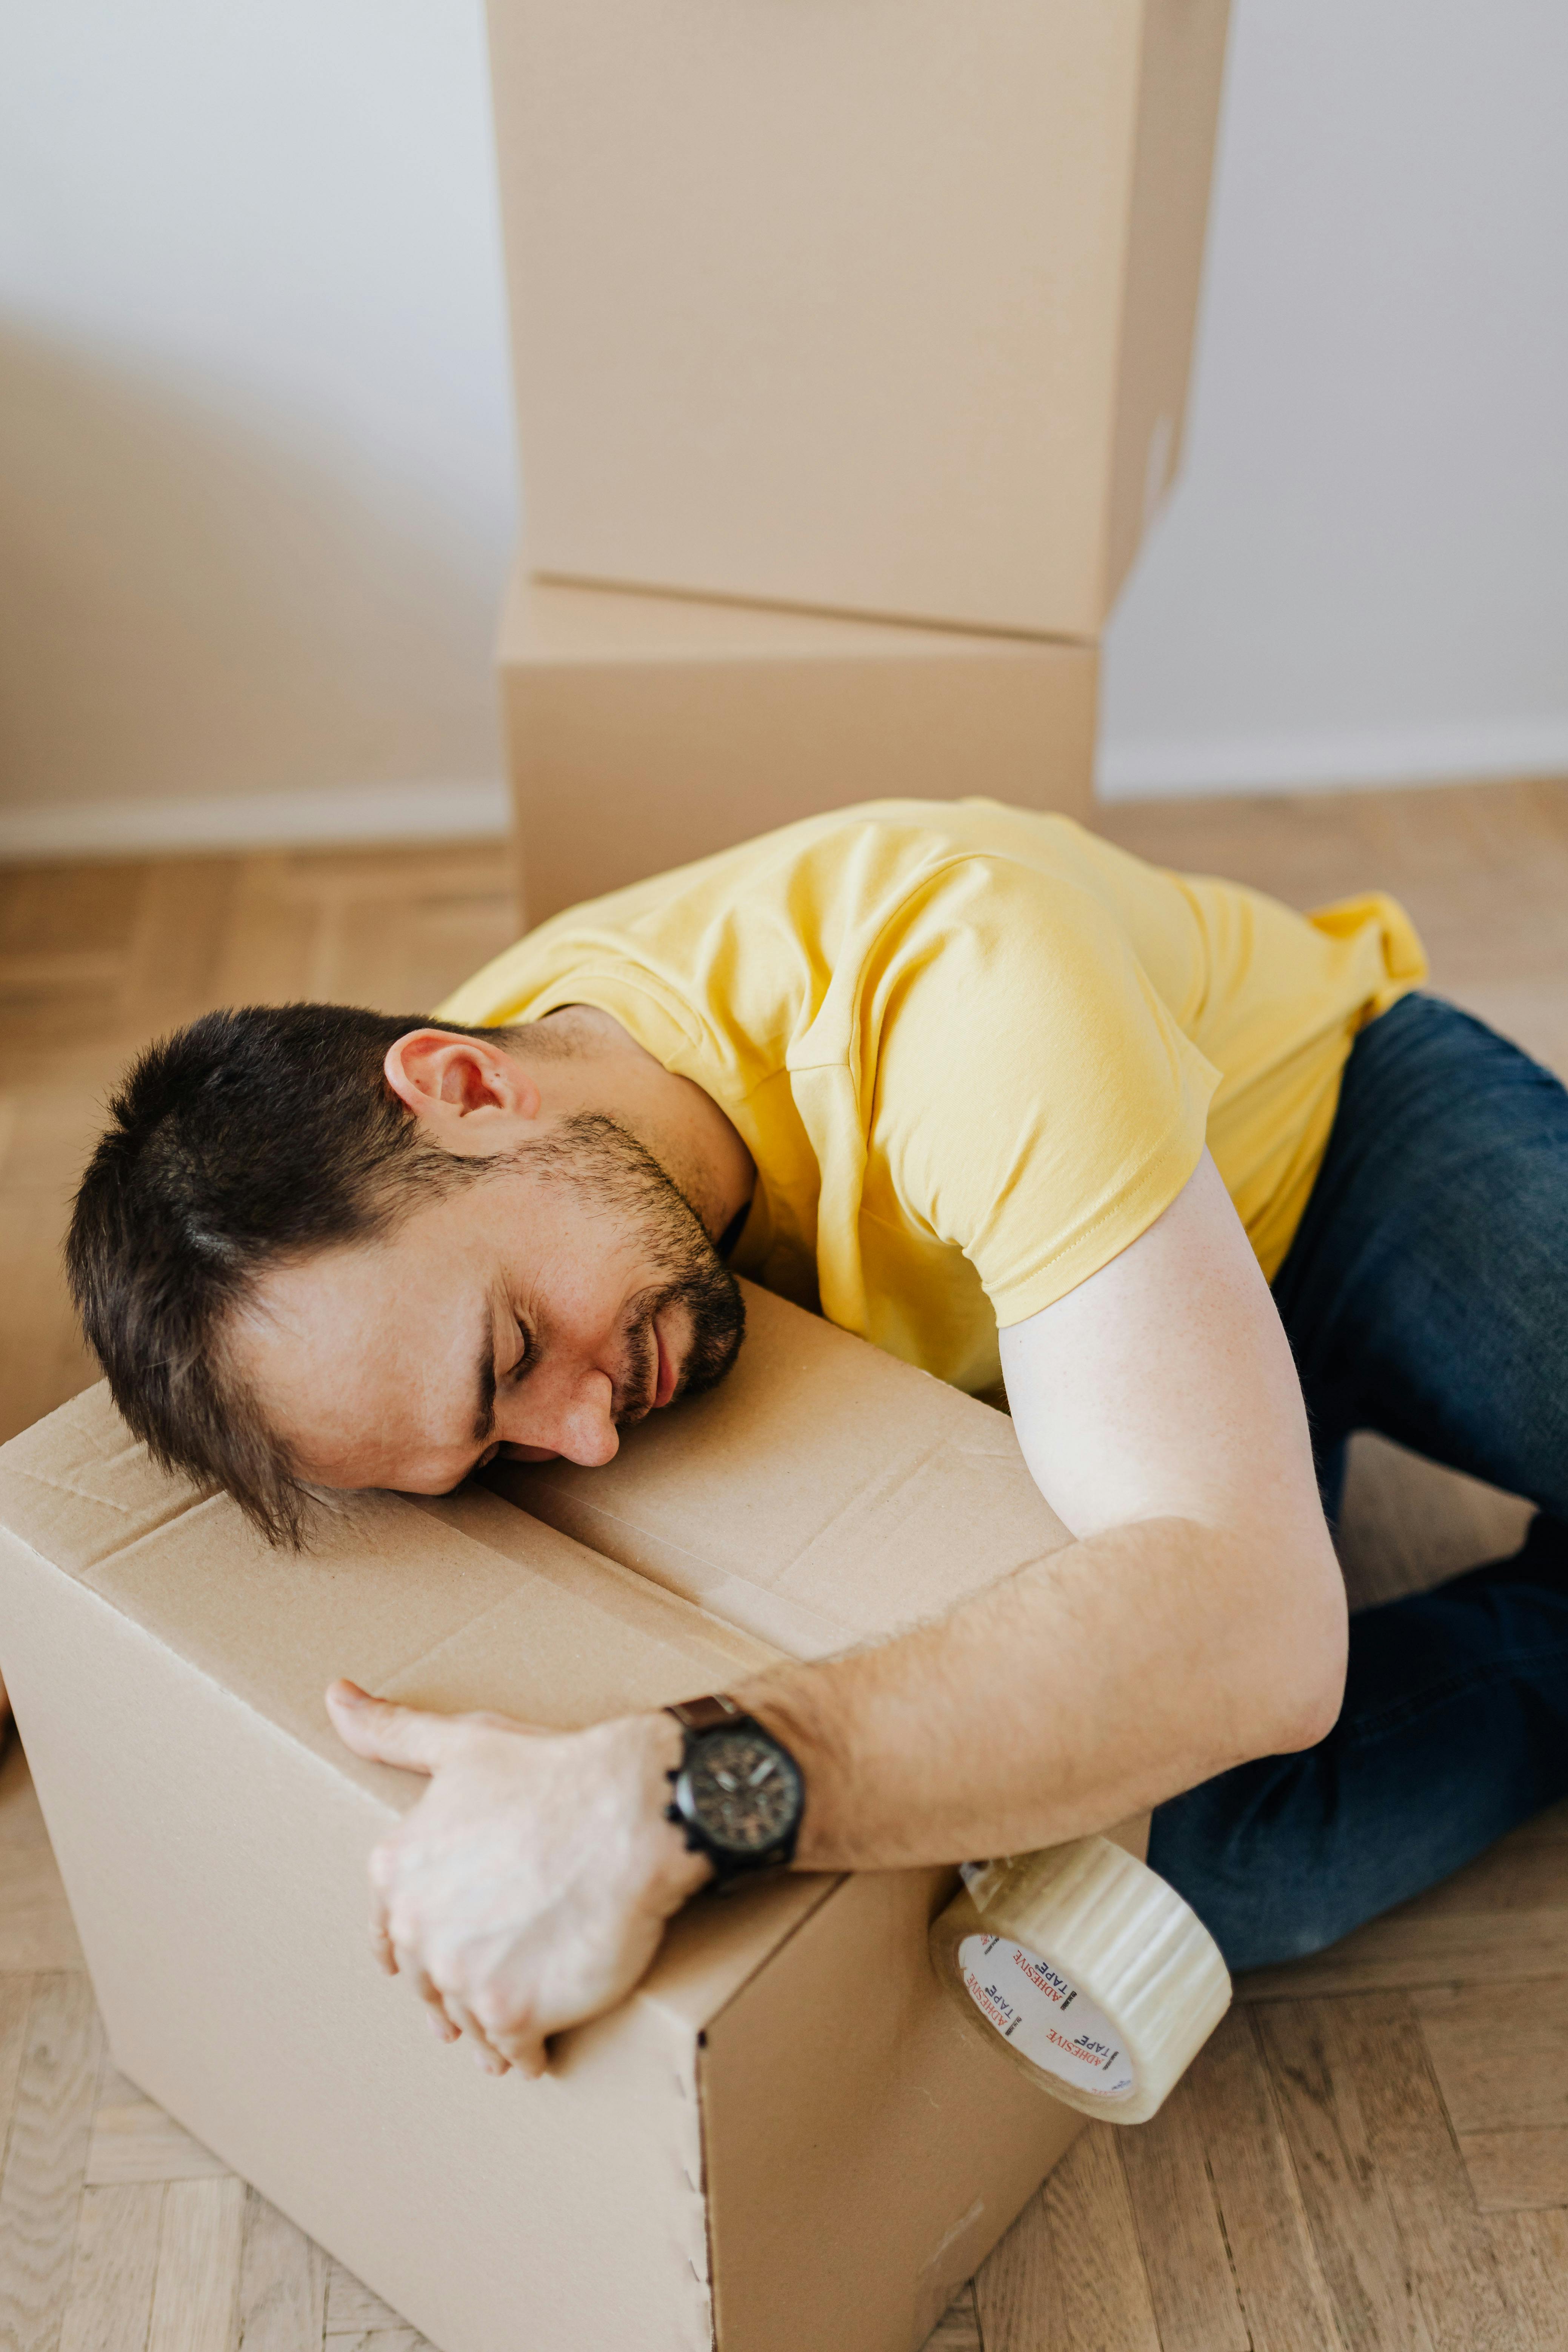 fatigued young man lying asleep on floor with carton box